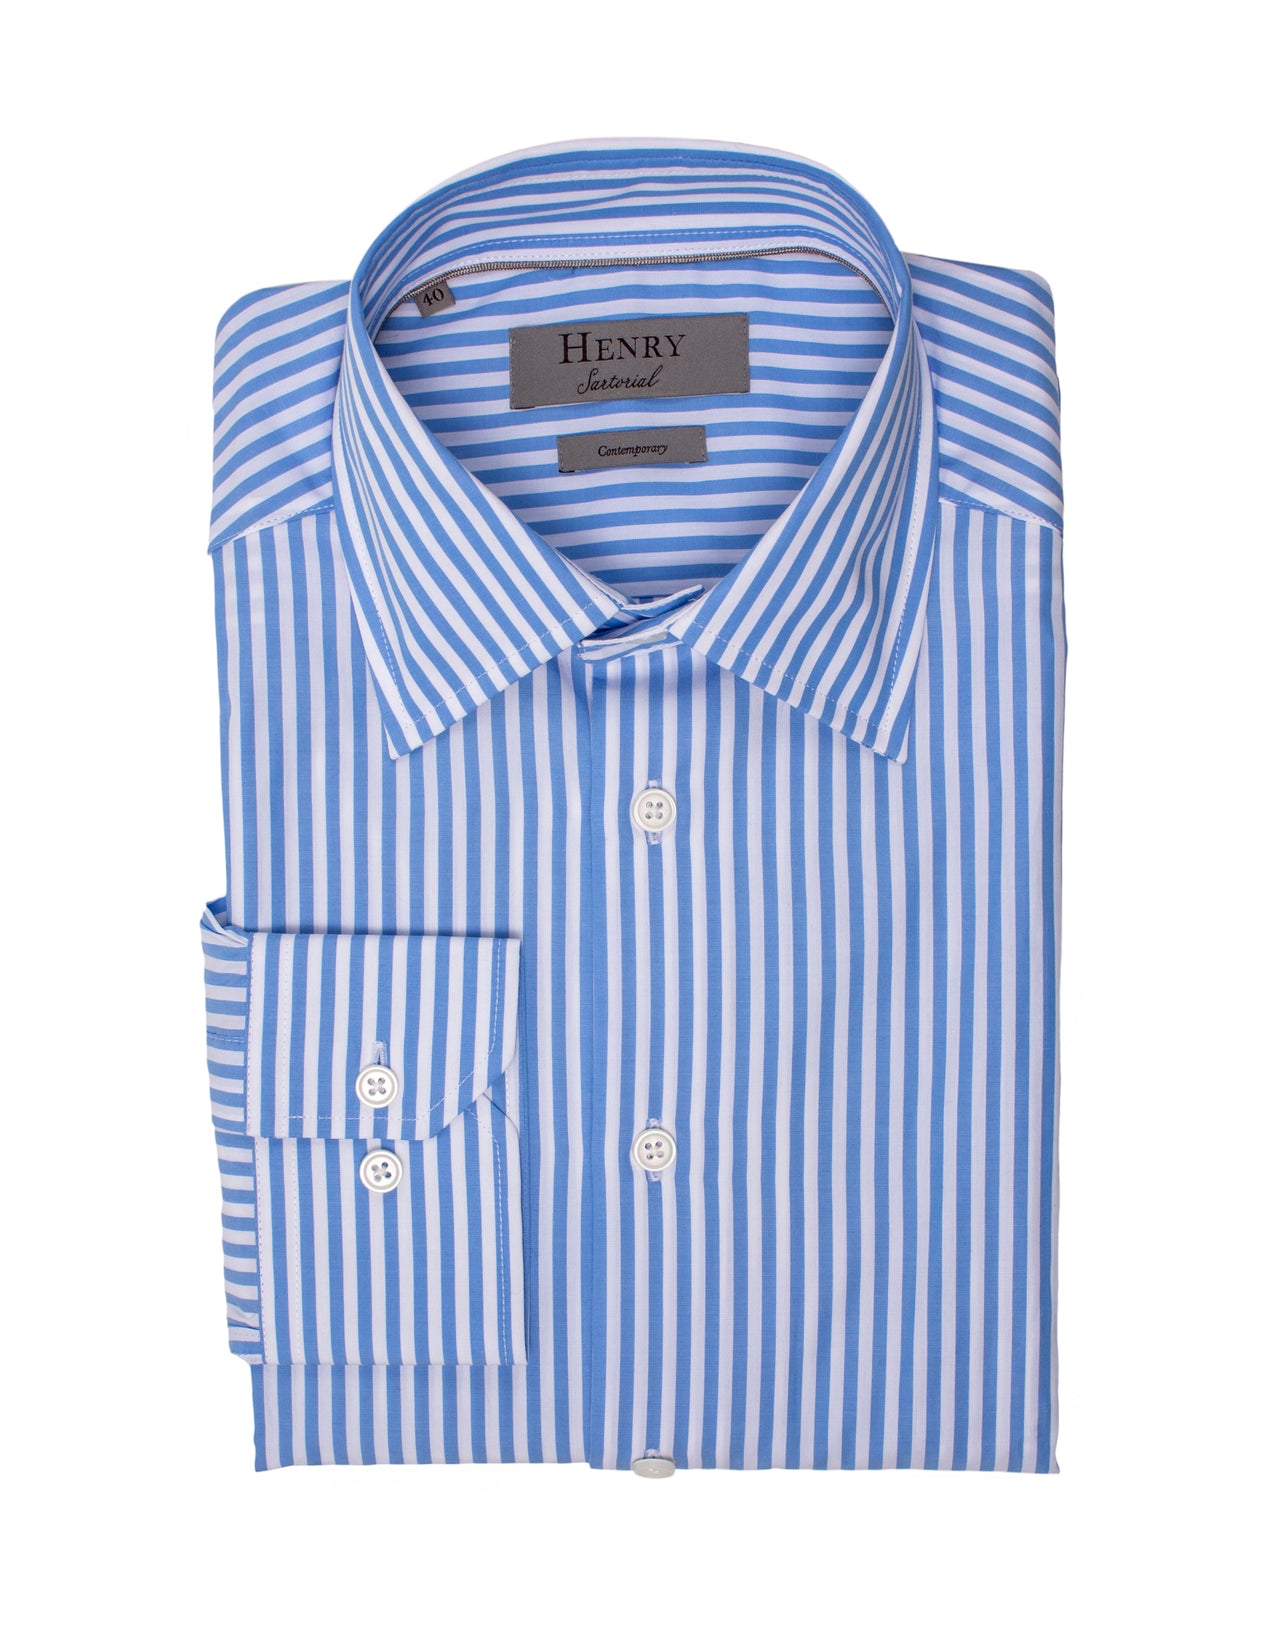 HENRY SARTORIAL Classic Fit Stripe Shirt NAVY/WHITE